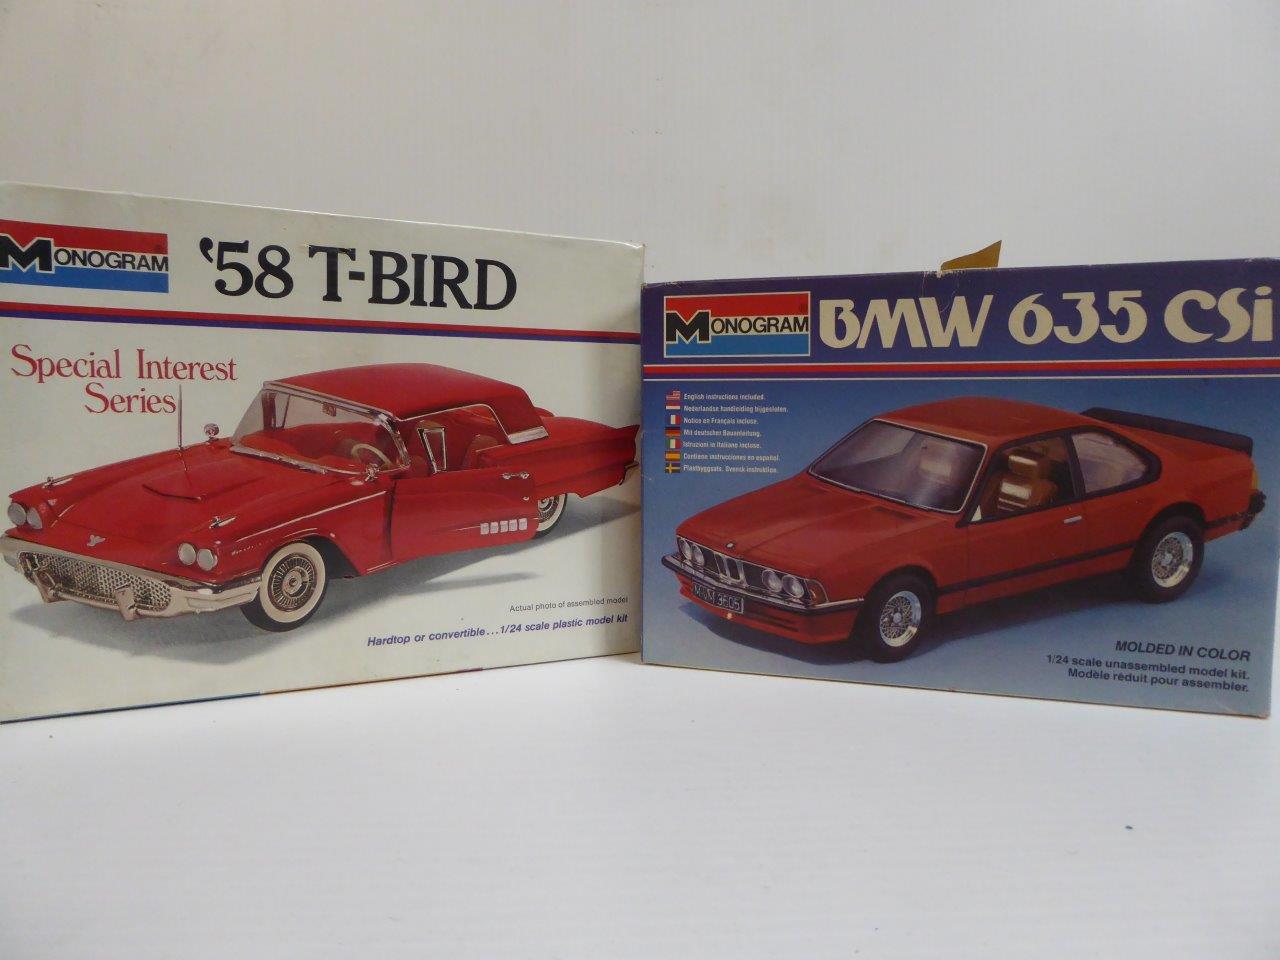 BMW 635 CSI and a 1958 T-Bird